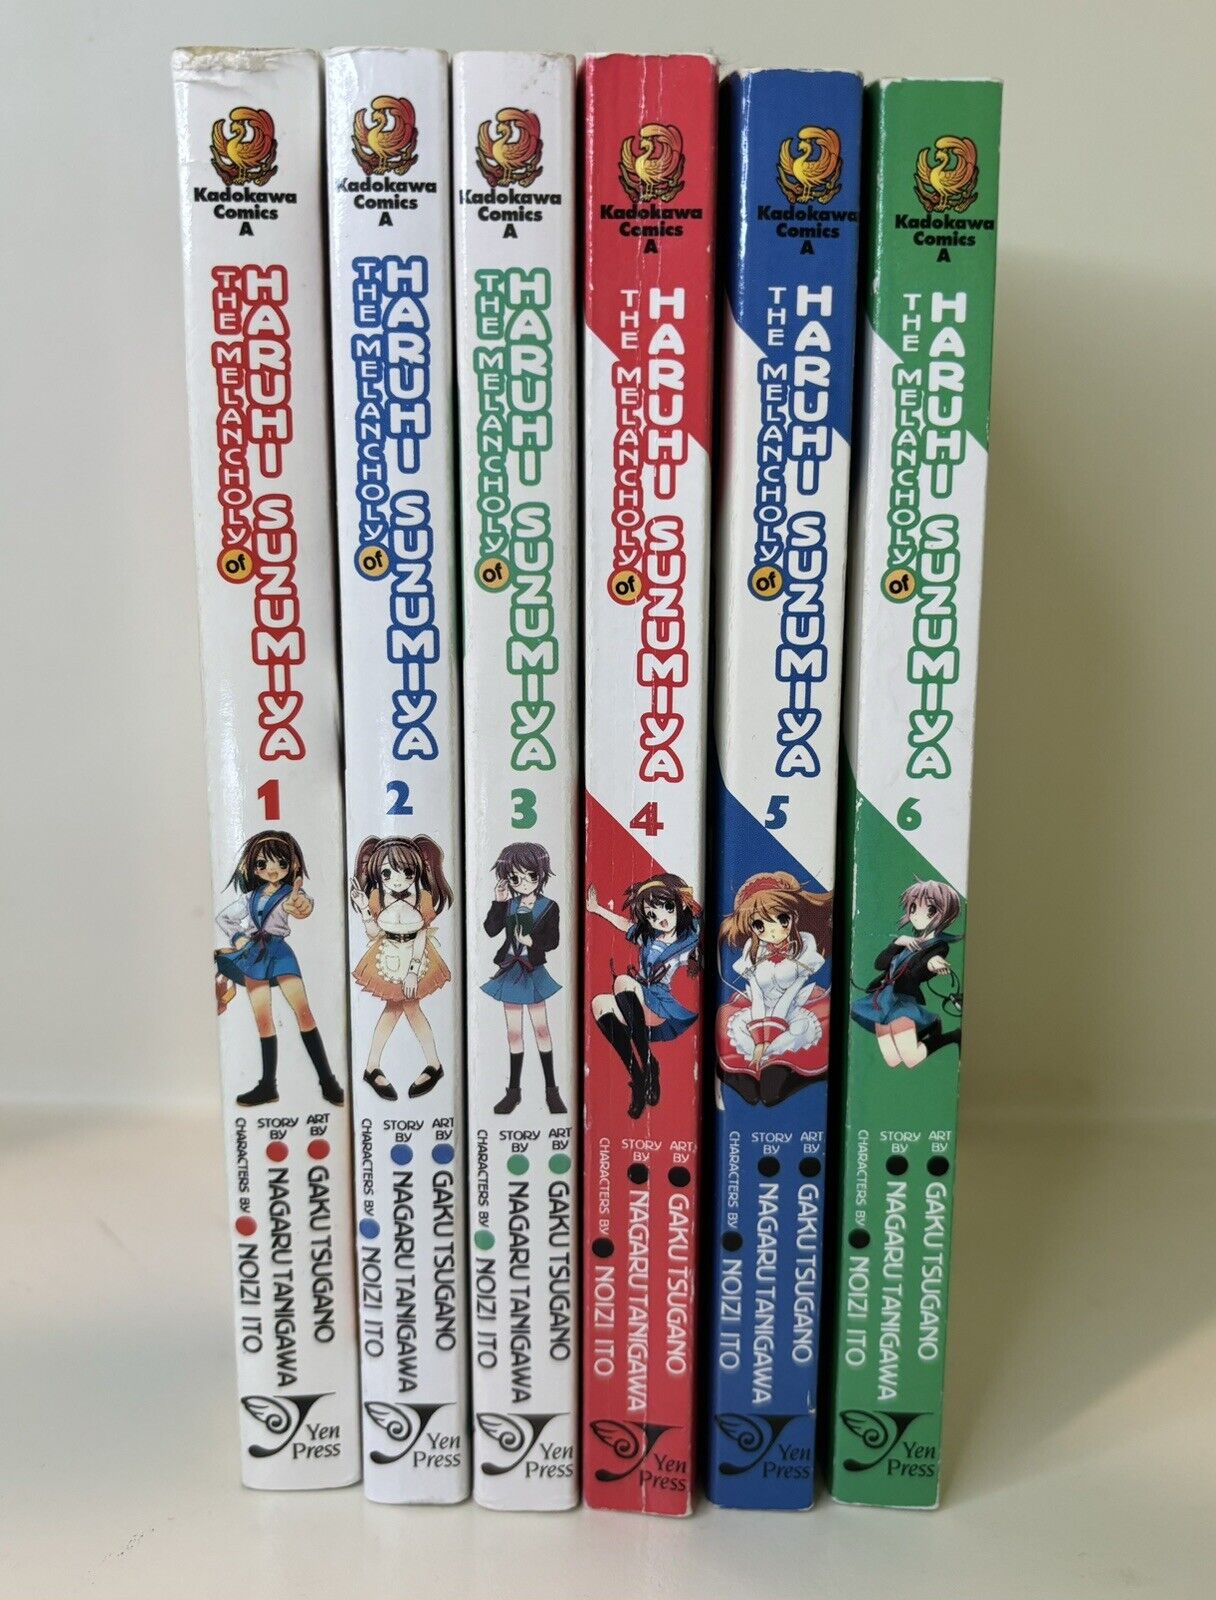 “The Melancholy of Haruhi Suzumiya” Manga Lot. Volumes 1-6